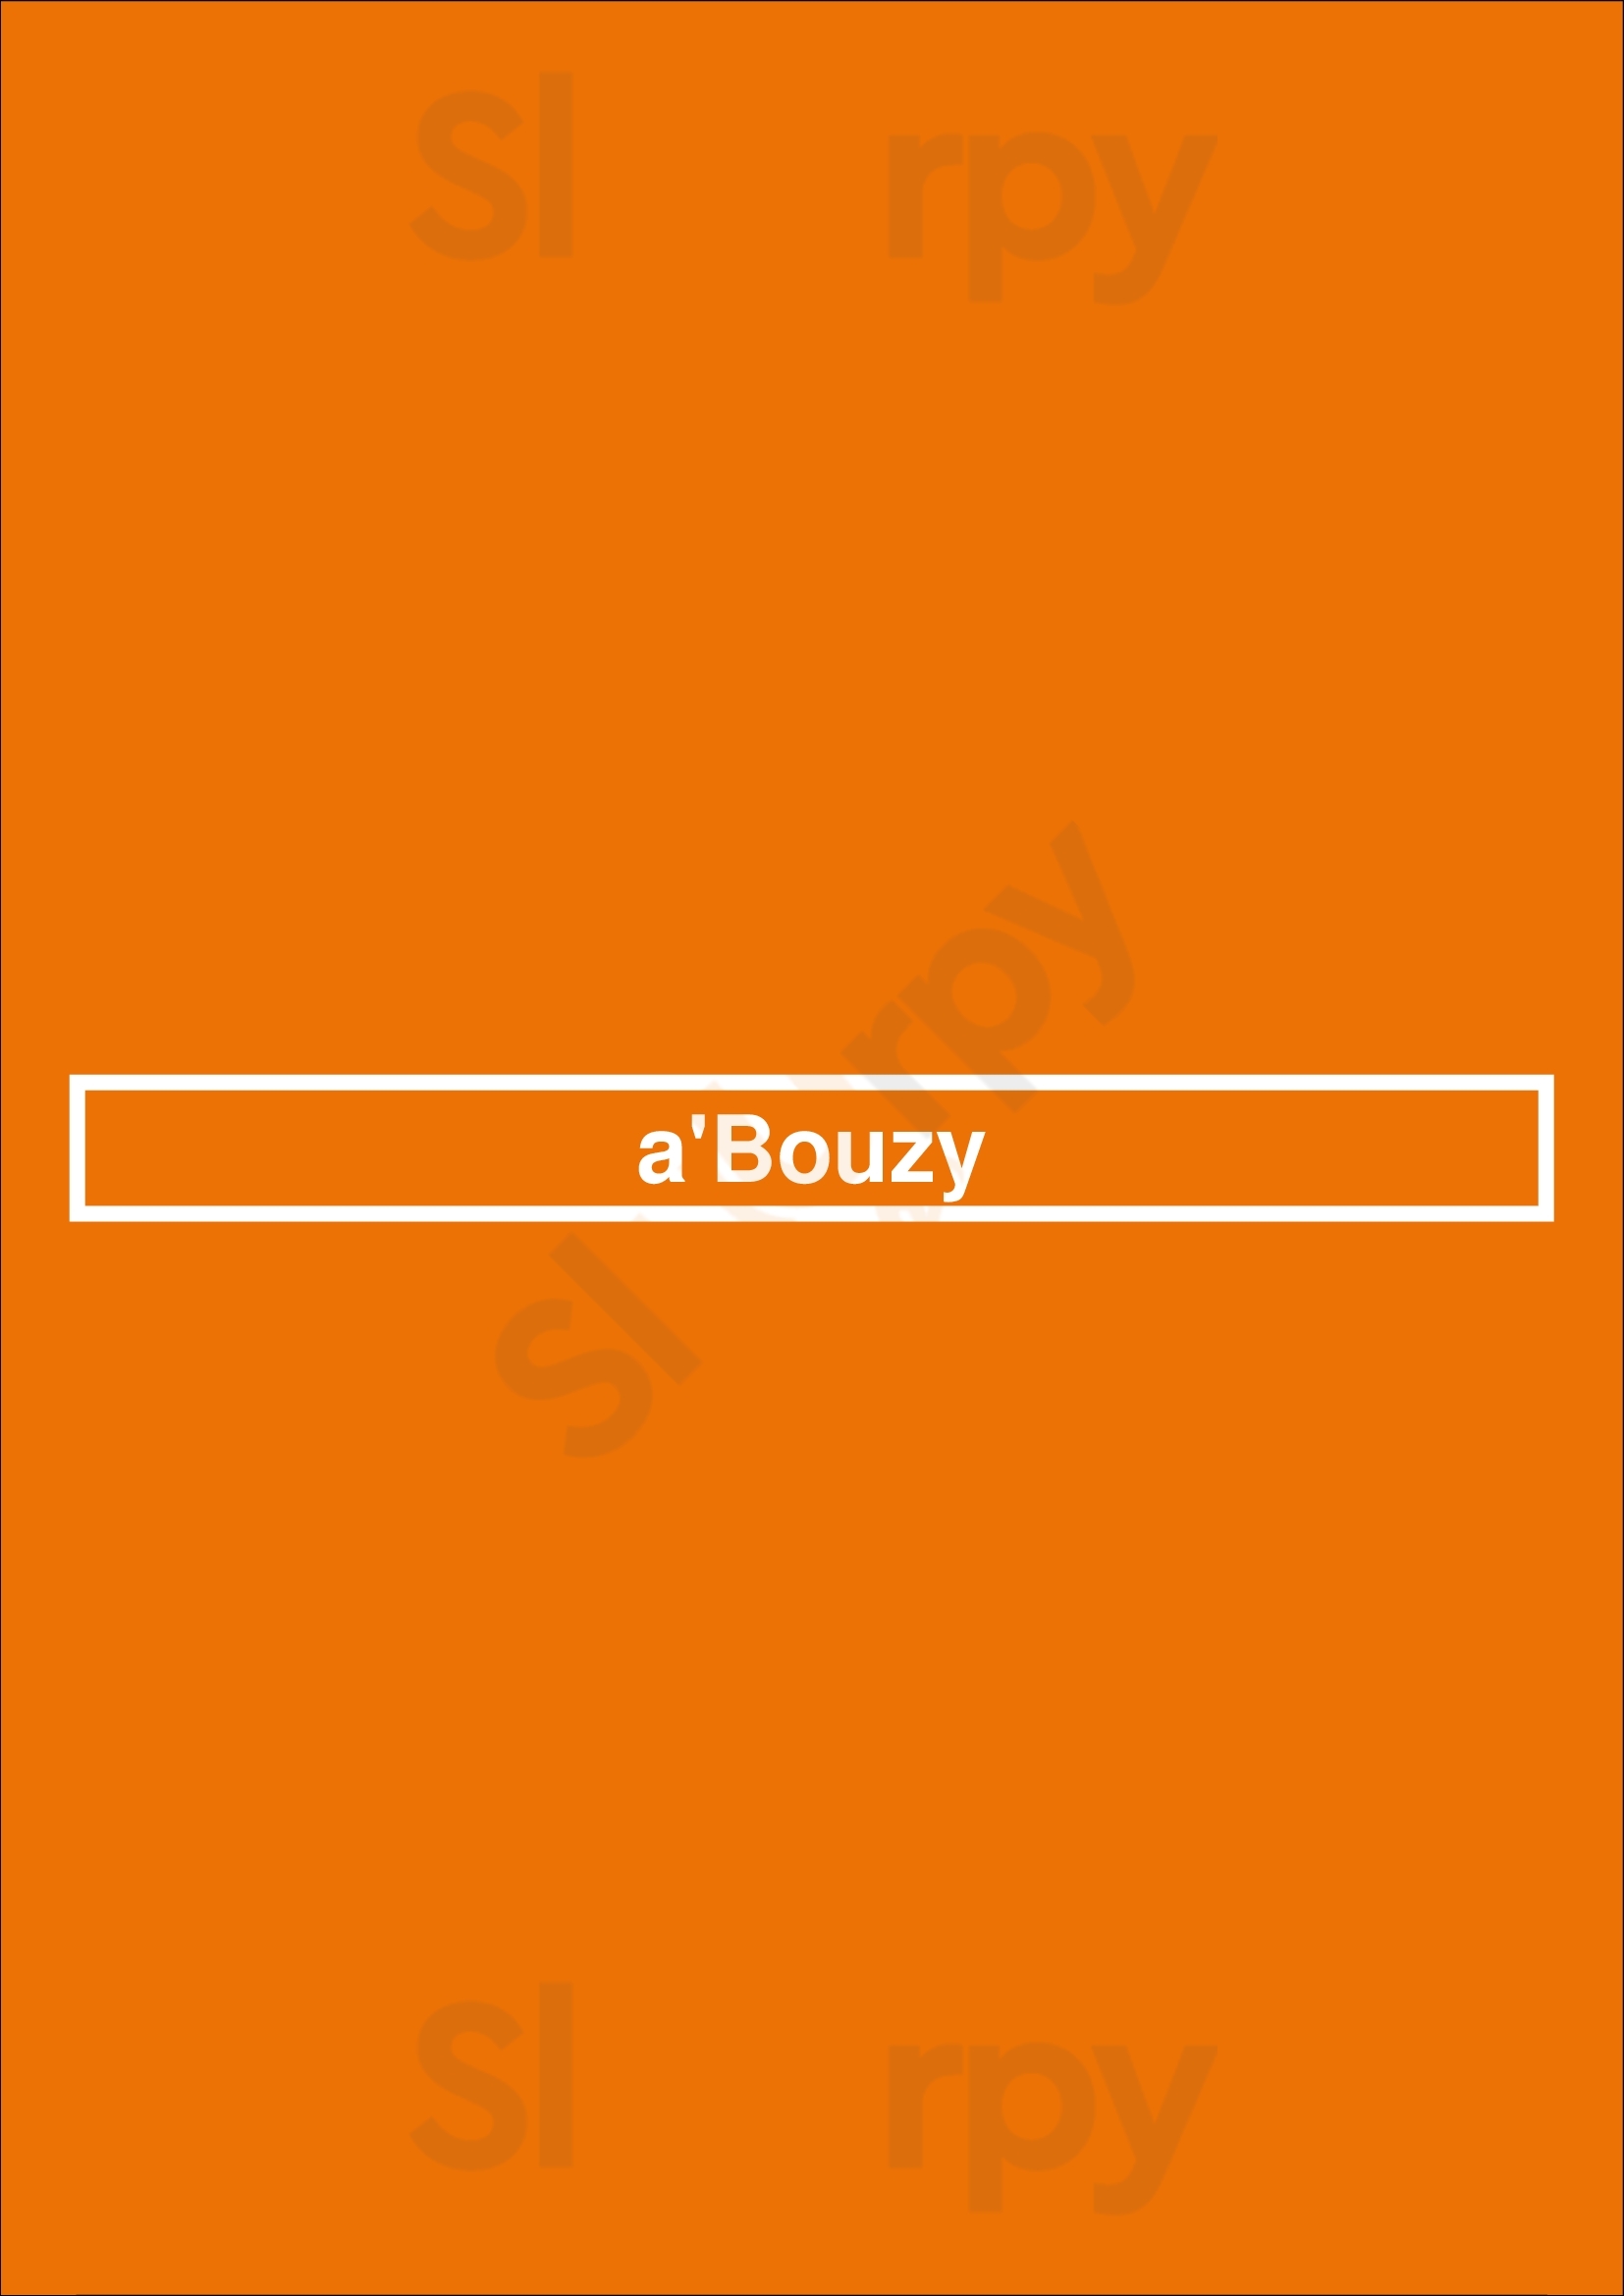 A'bouzy Houston Menu - 1